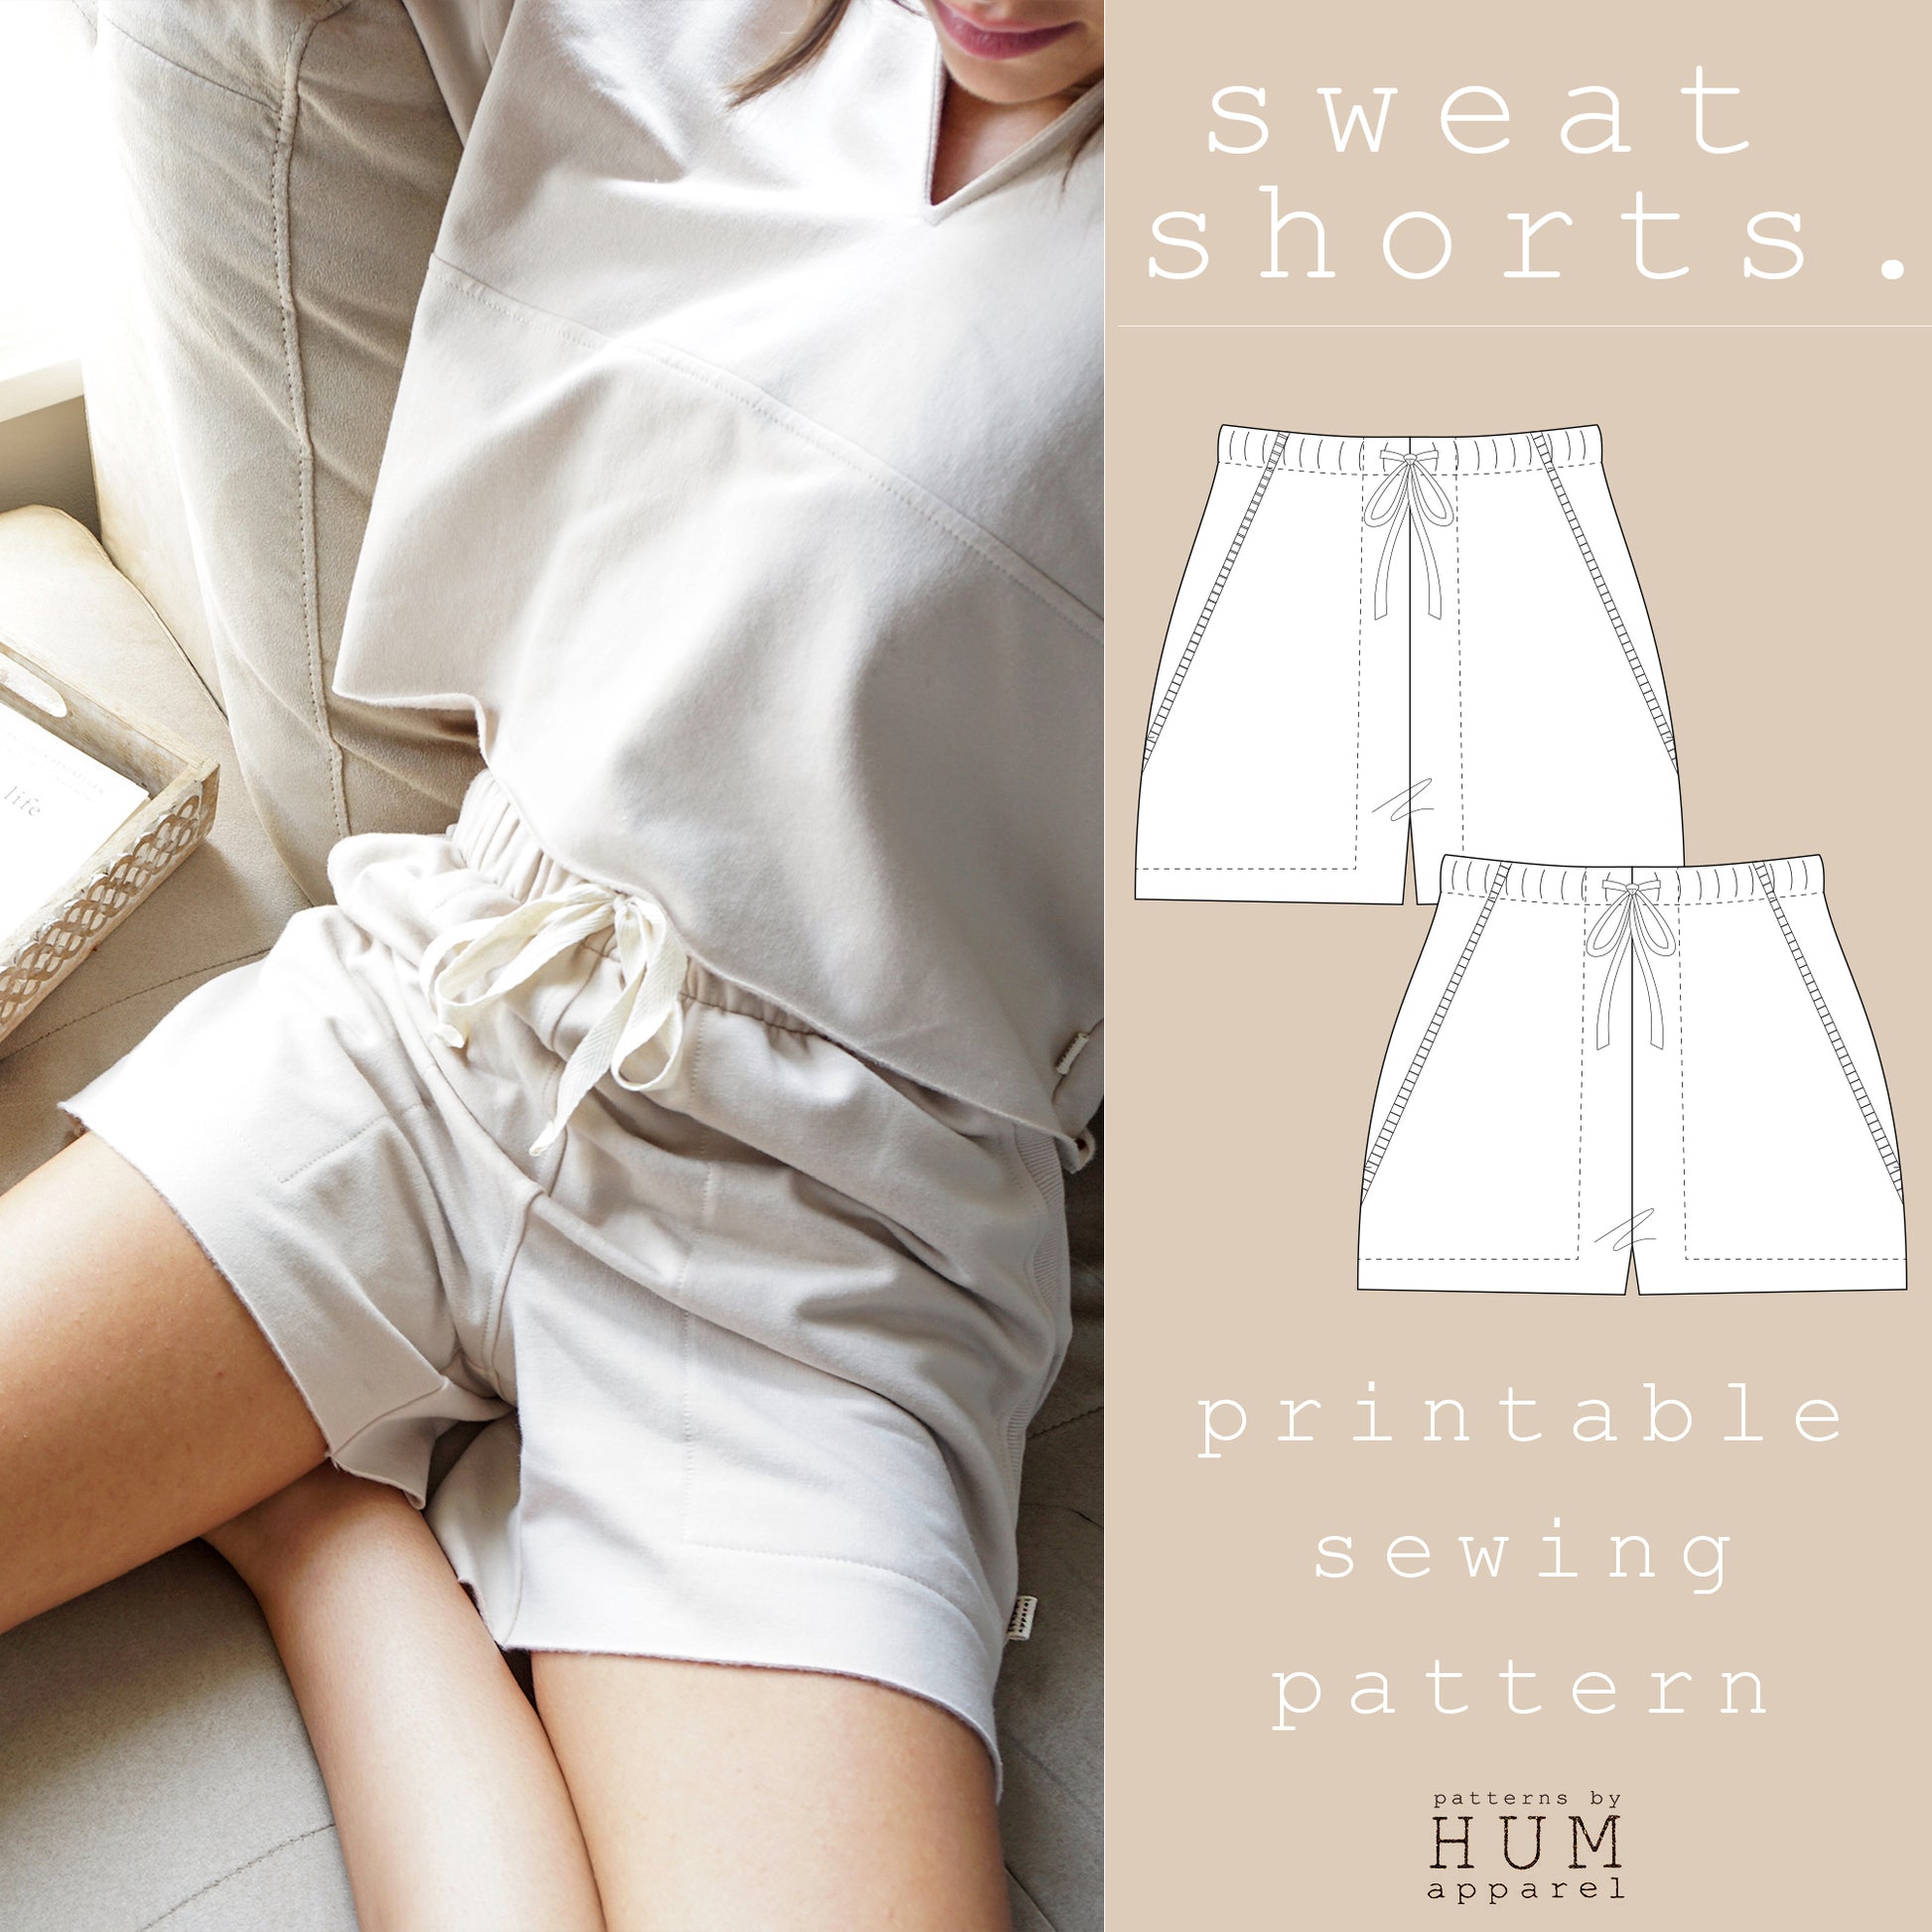 sweat shorts sewing pattern. – HUM apparel